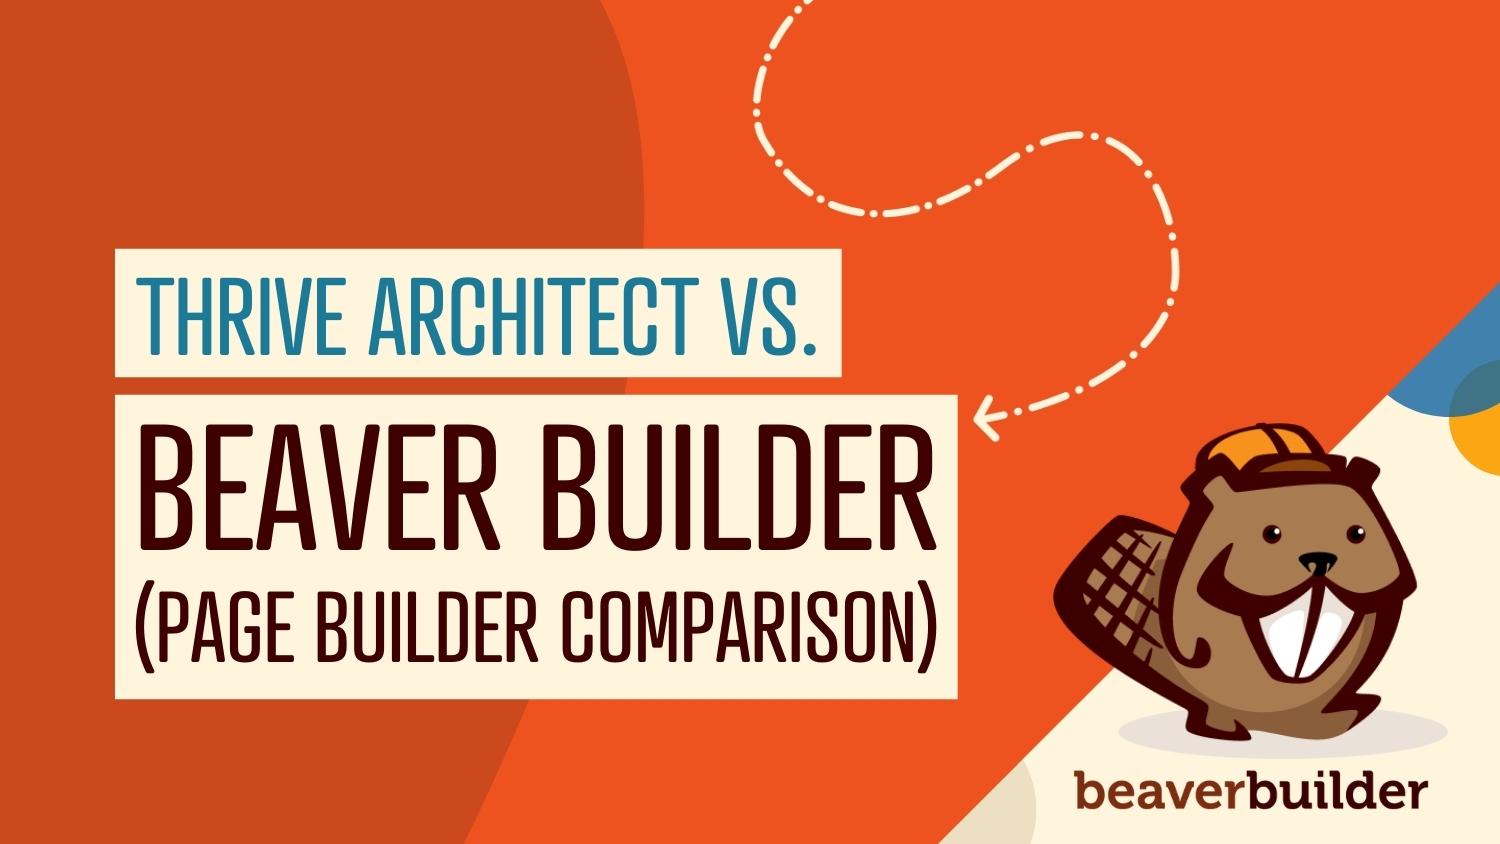 Beaver Builder vs Thrive Architect: A Page Builder Comparison